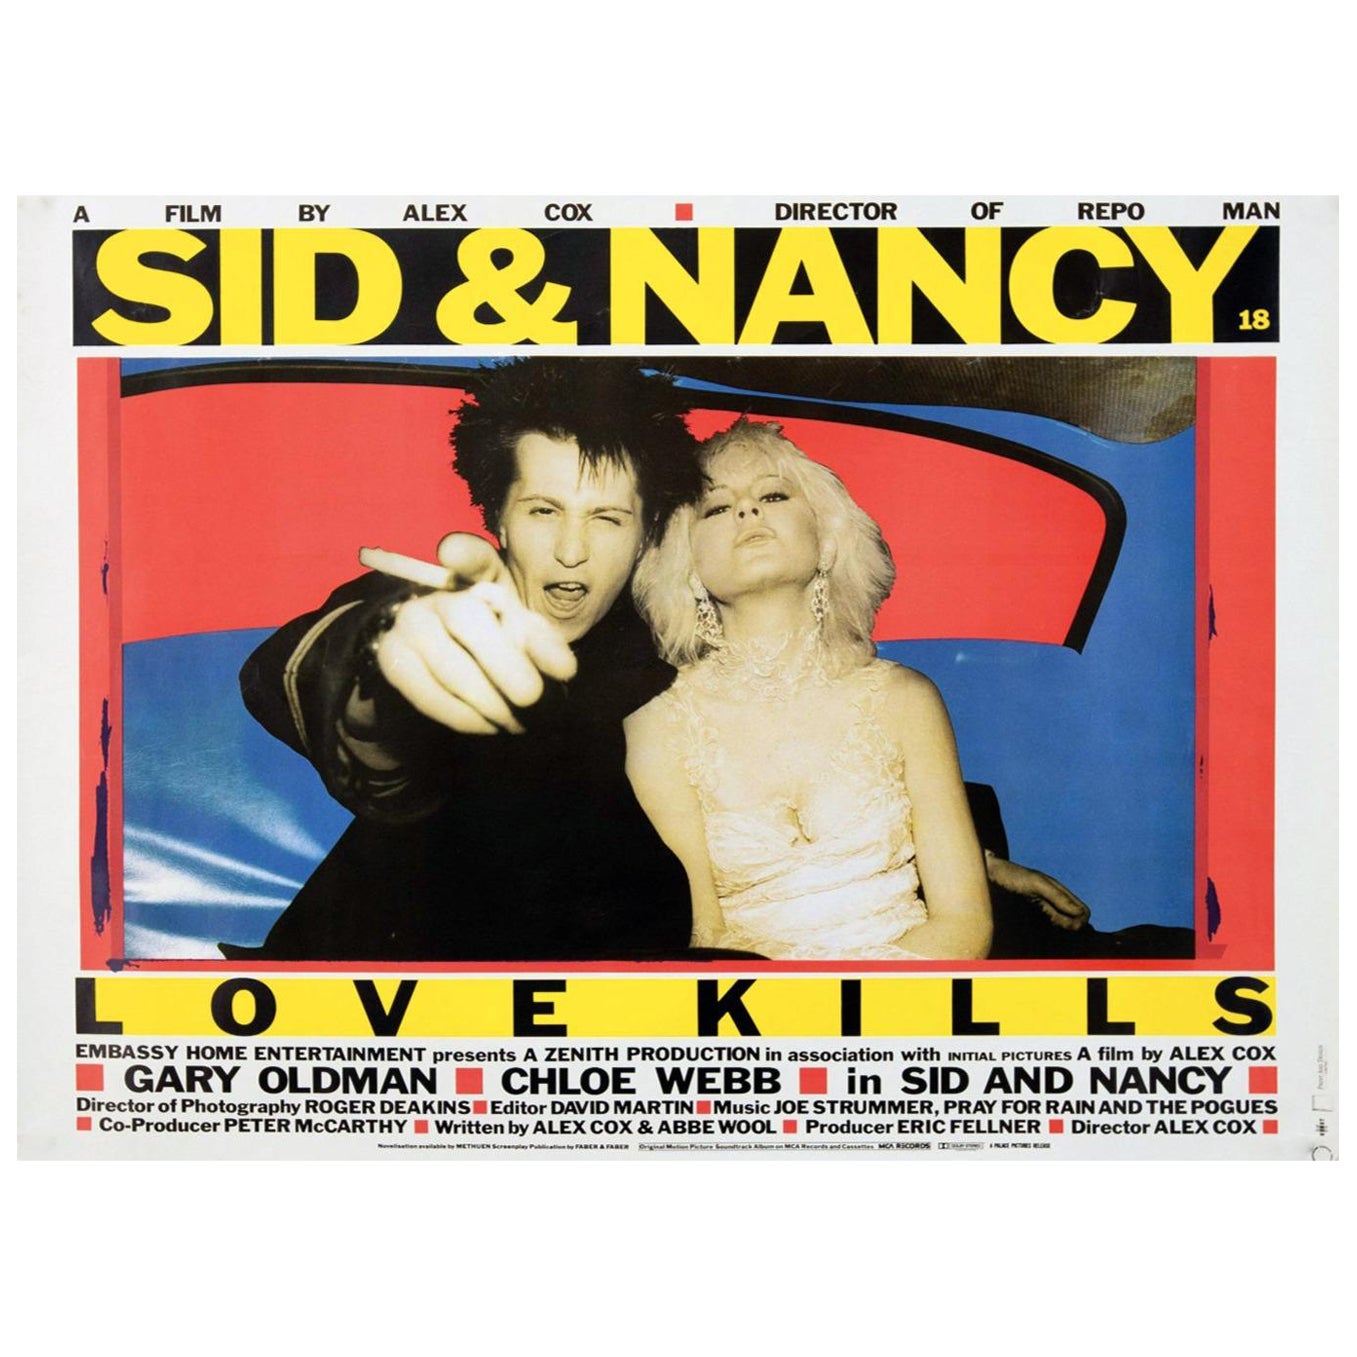 Affiche vintage originale Sid & Nancy, 1983 en vente